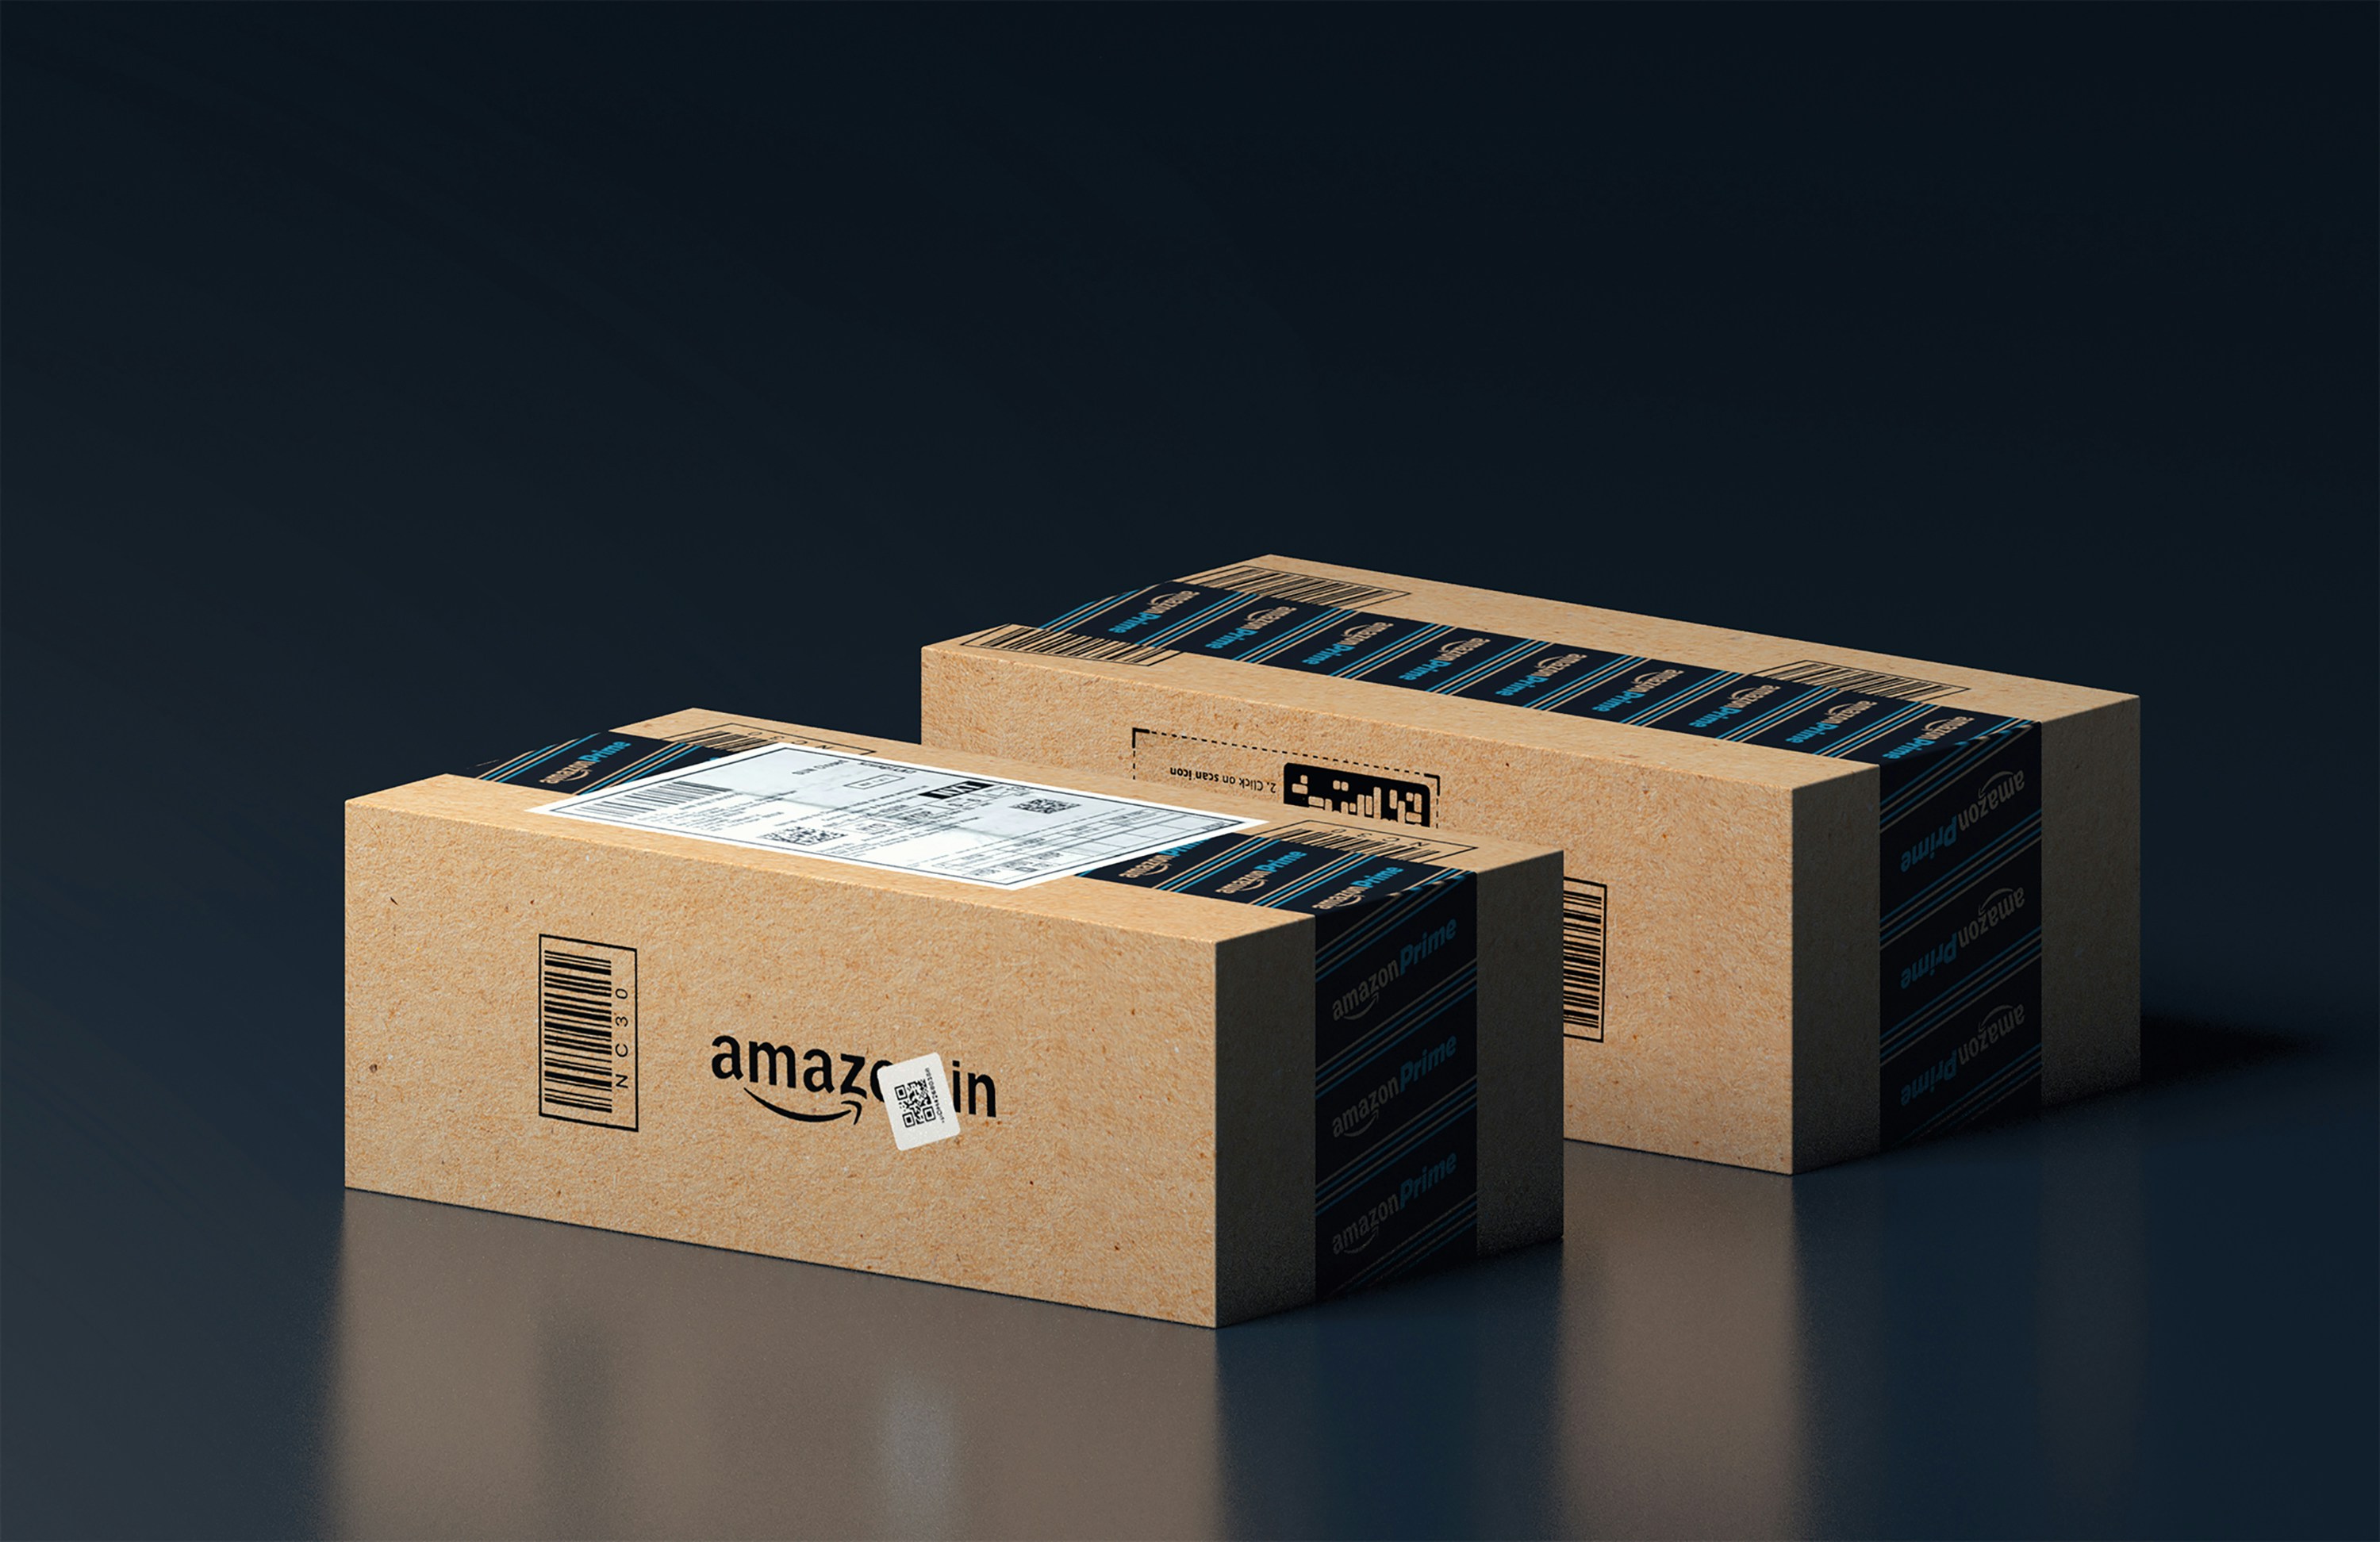 Amazon is spending big to take on UPS and FedEx - The Exchange